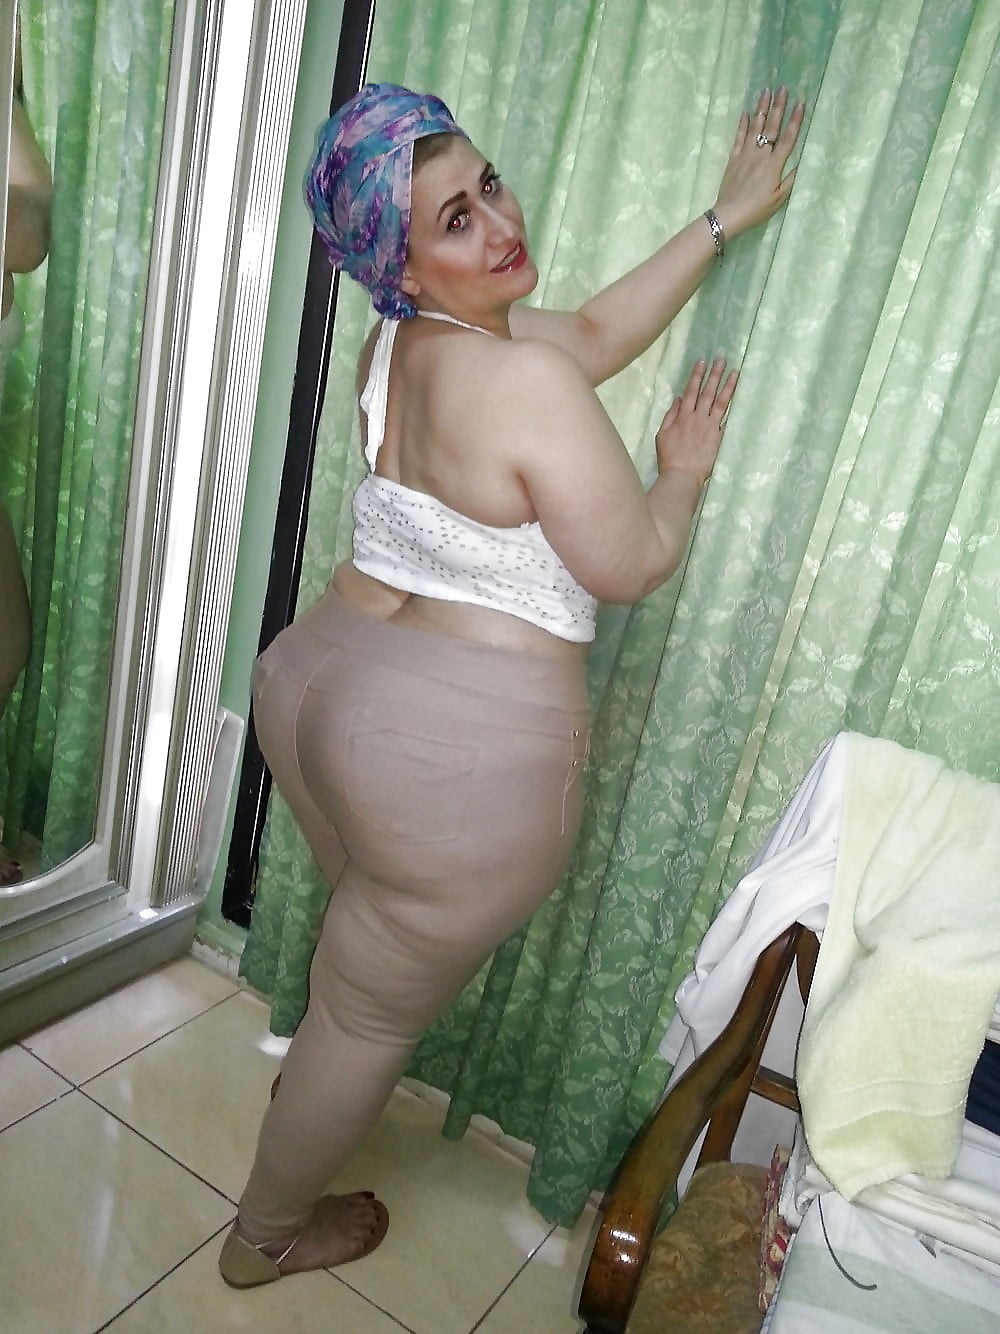 Fat Hijab Nude - Fat Girl in a Hijab (46 photos) - motherless porn pics